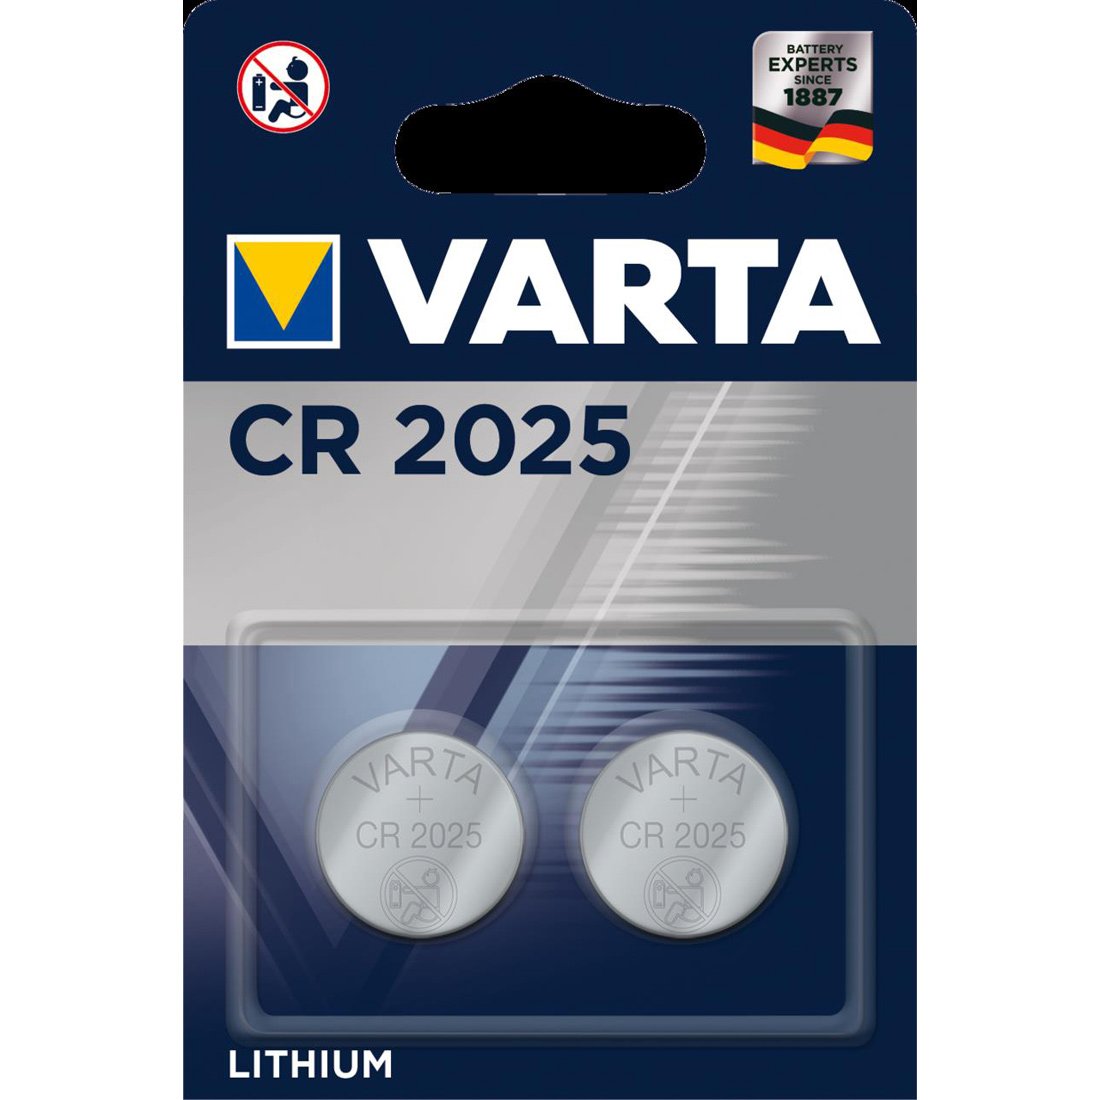 VARTA BATTERI LITHIUM CR2025 2-PACK